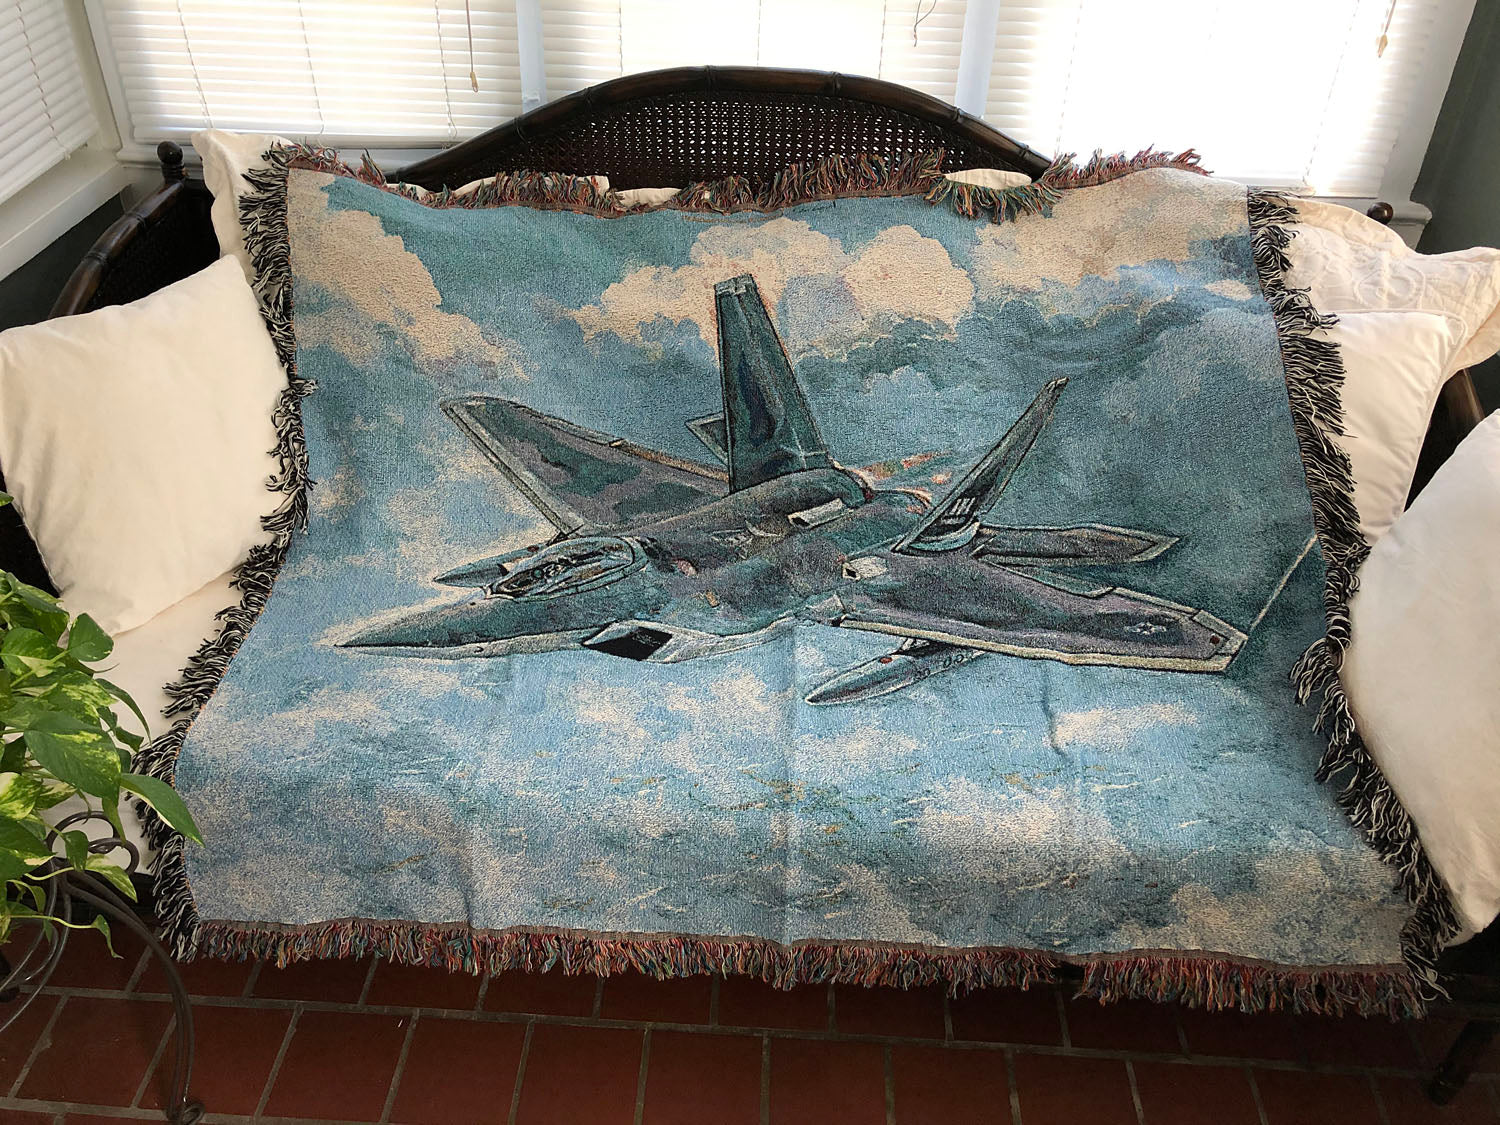 Raptor F-22 Painting Woven Blanket Throw